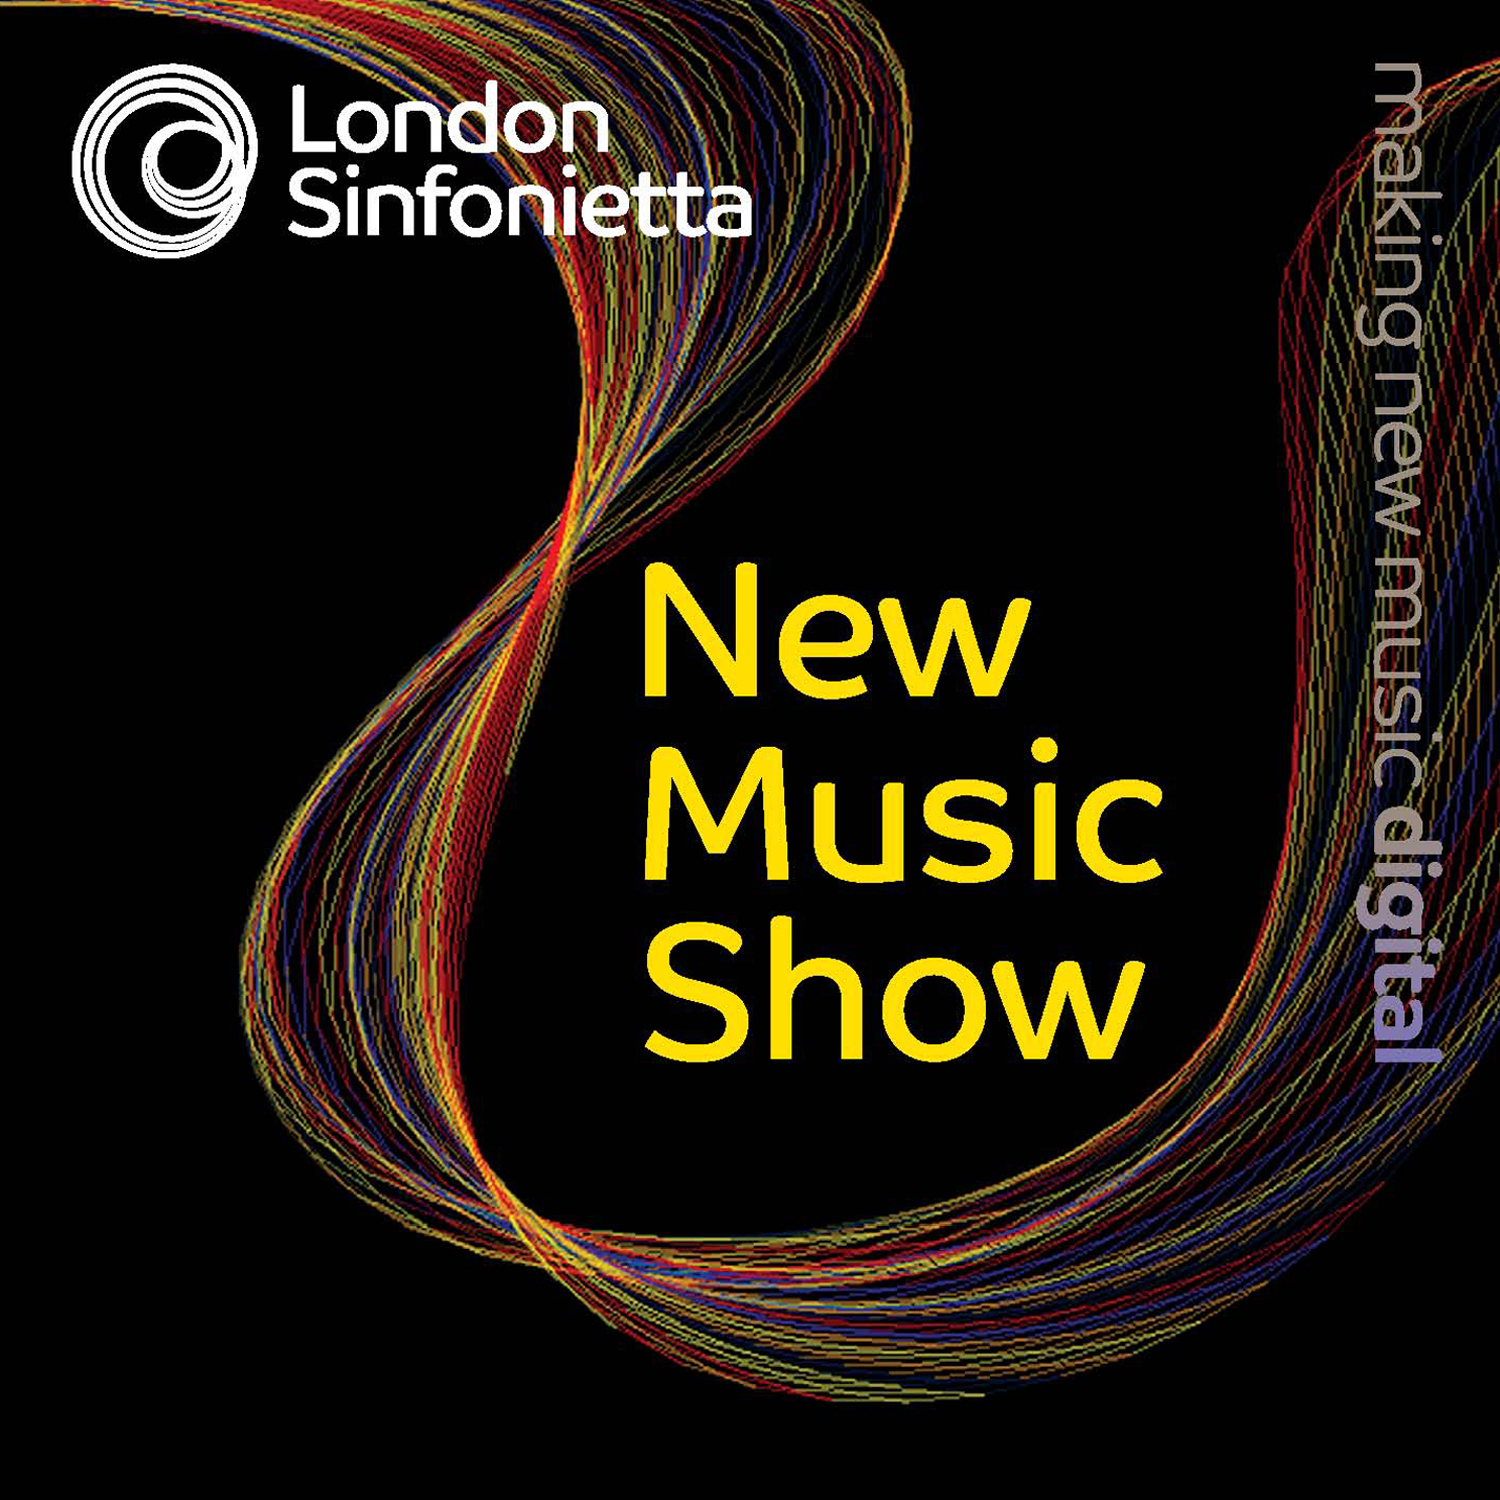 London Sinfonietta Label: New Music Show